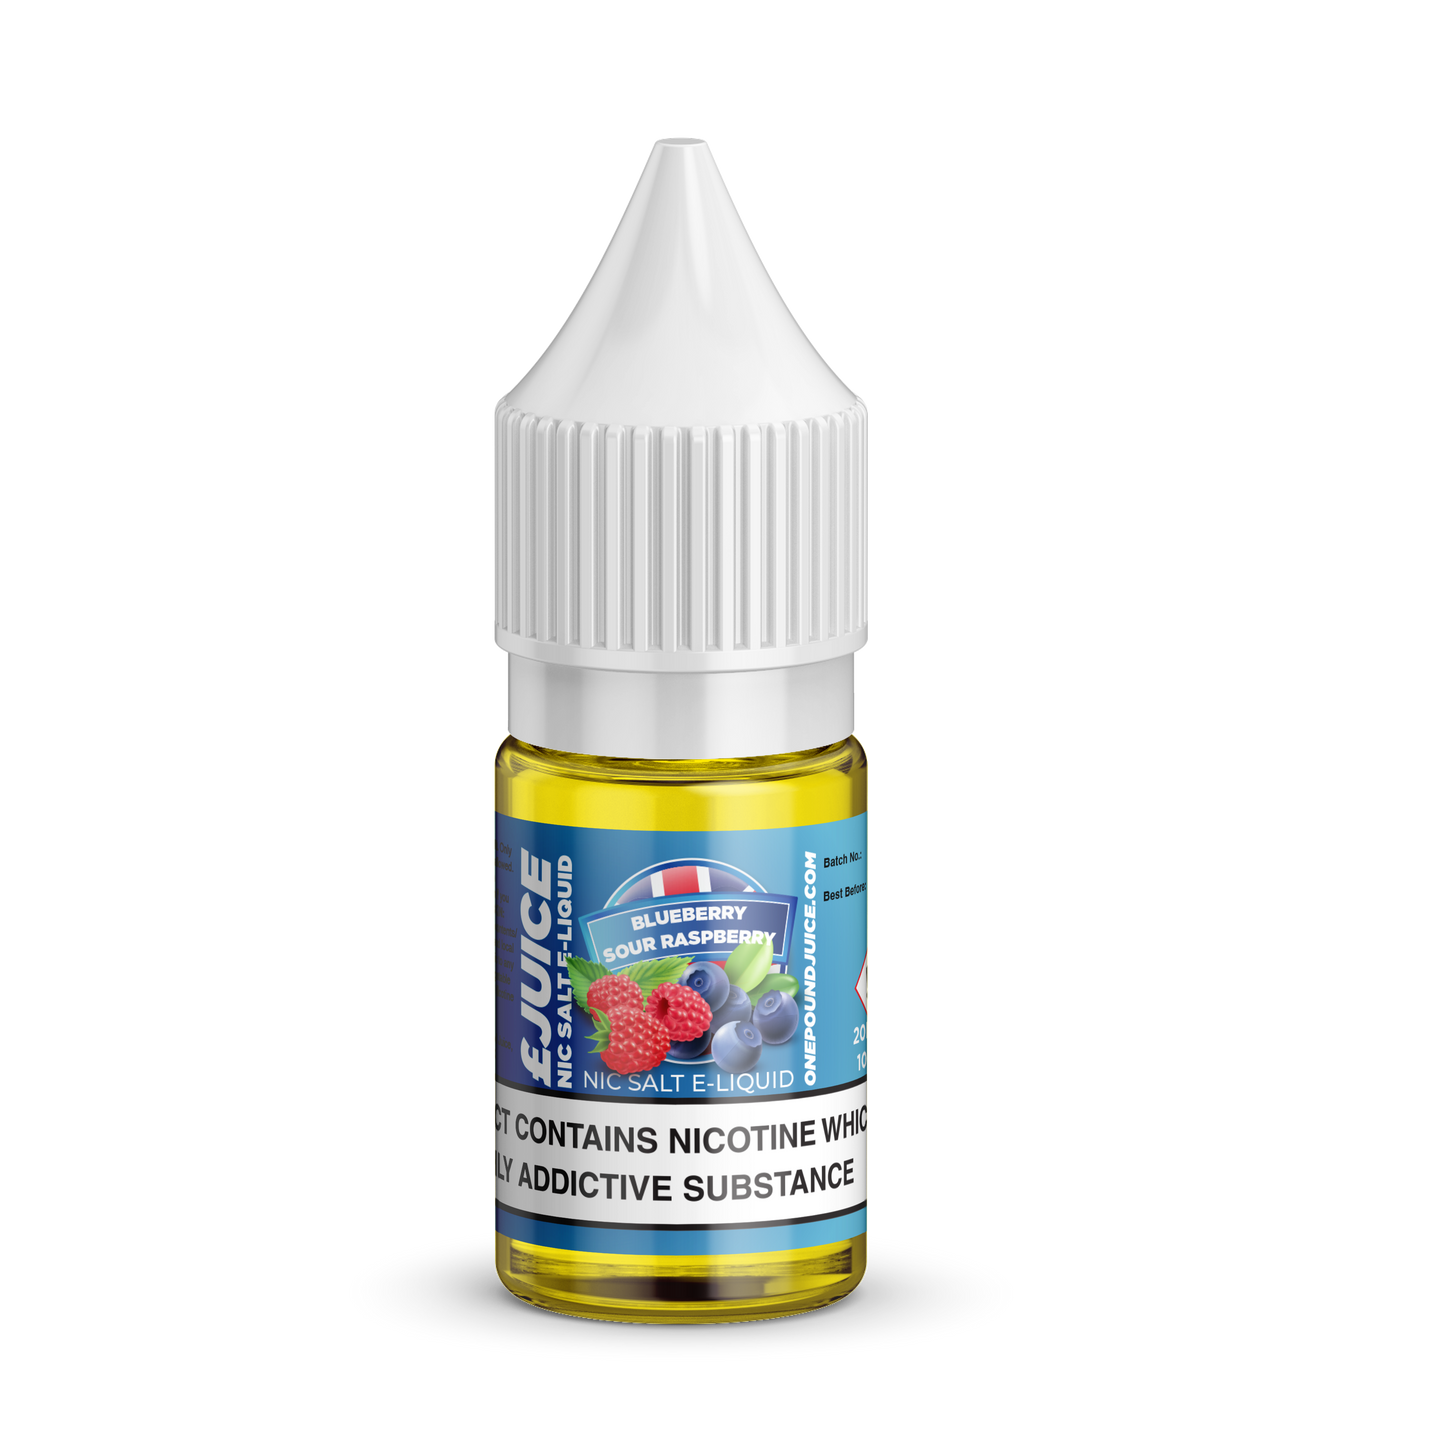 Blueberry Sour Raspberry Nic Salt E-Liquid by One Pound Juice